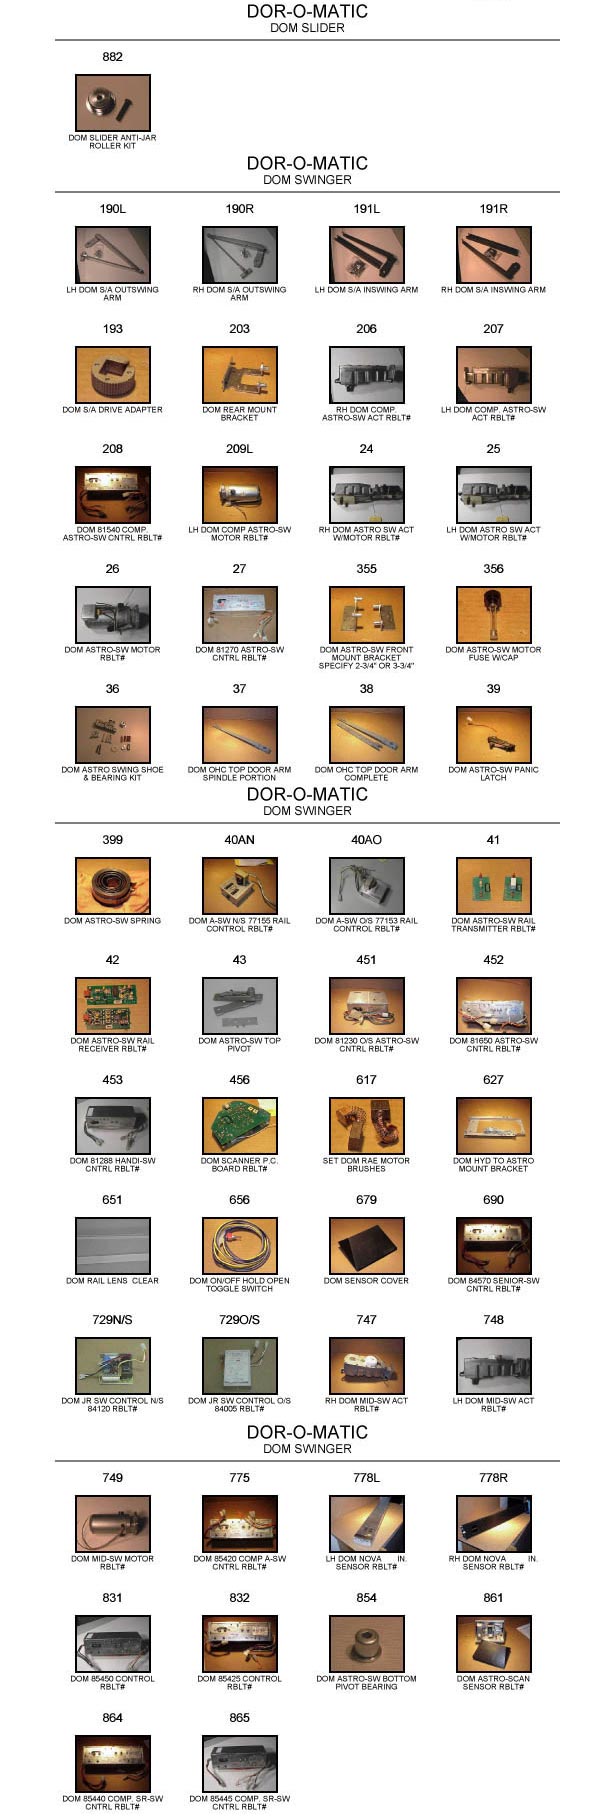 Dor-O-Matic automatic door replacement parts catalog 3